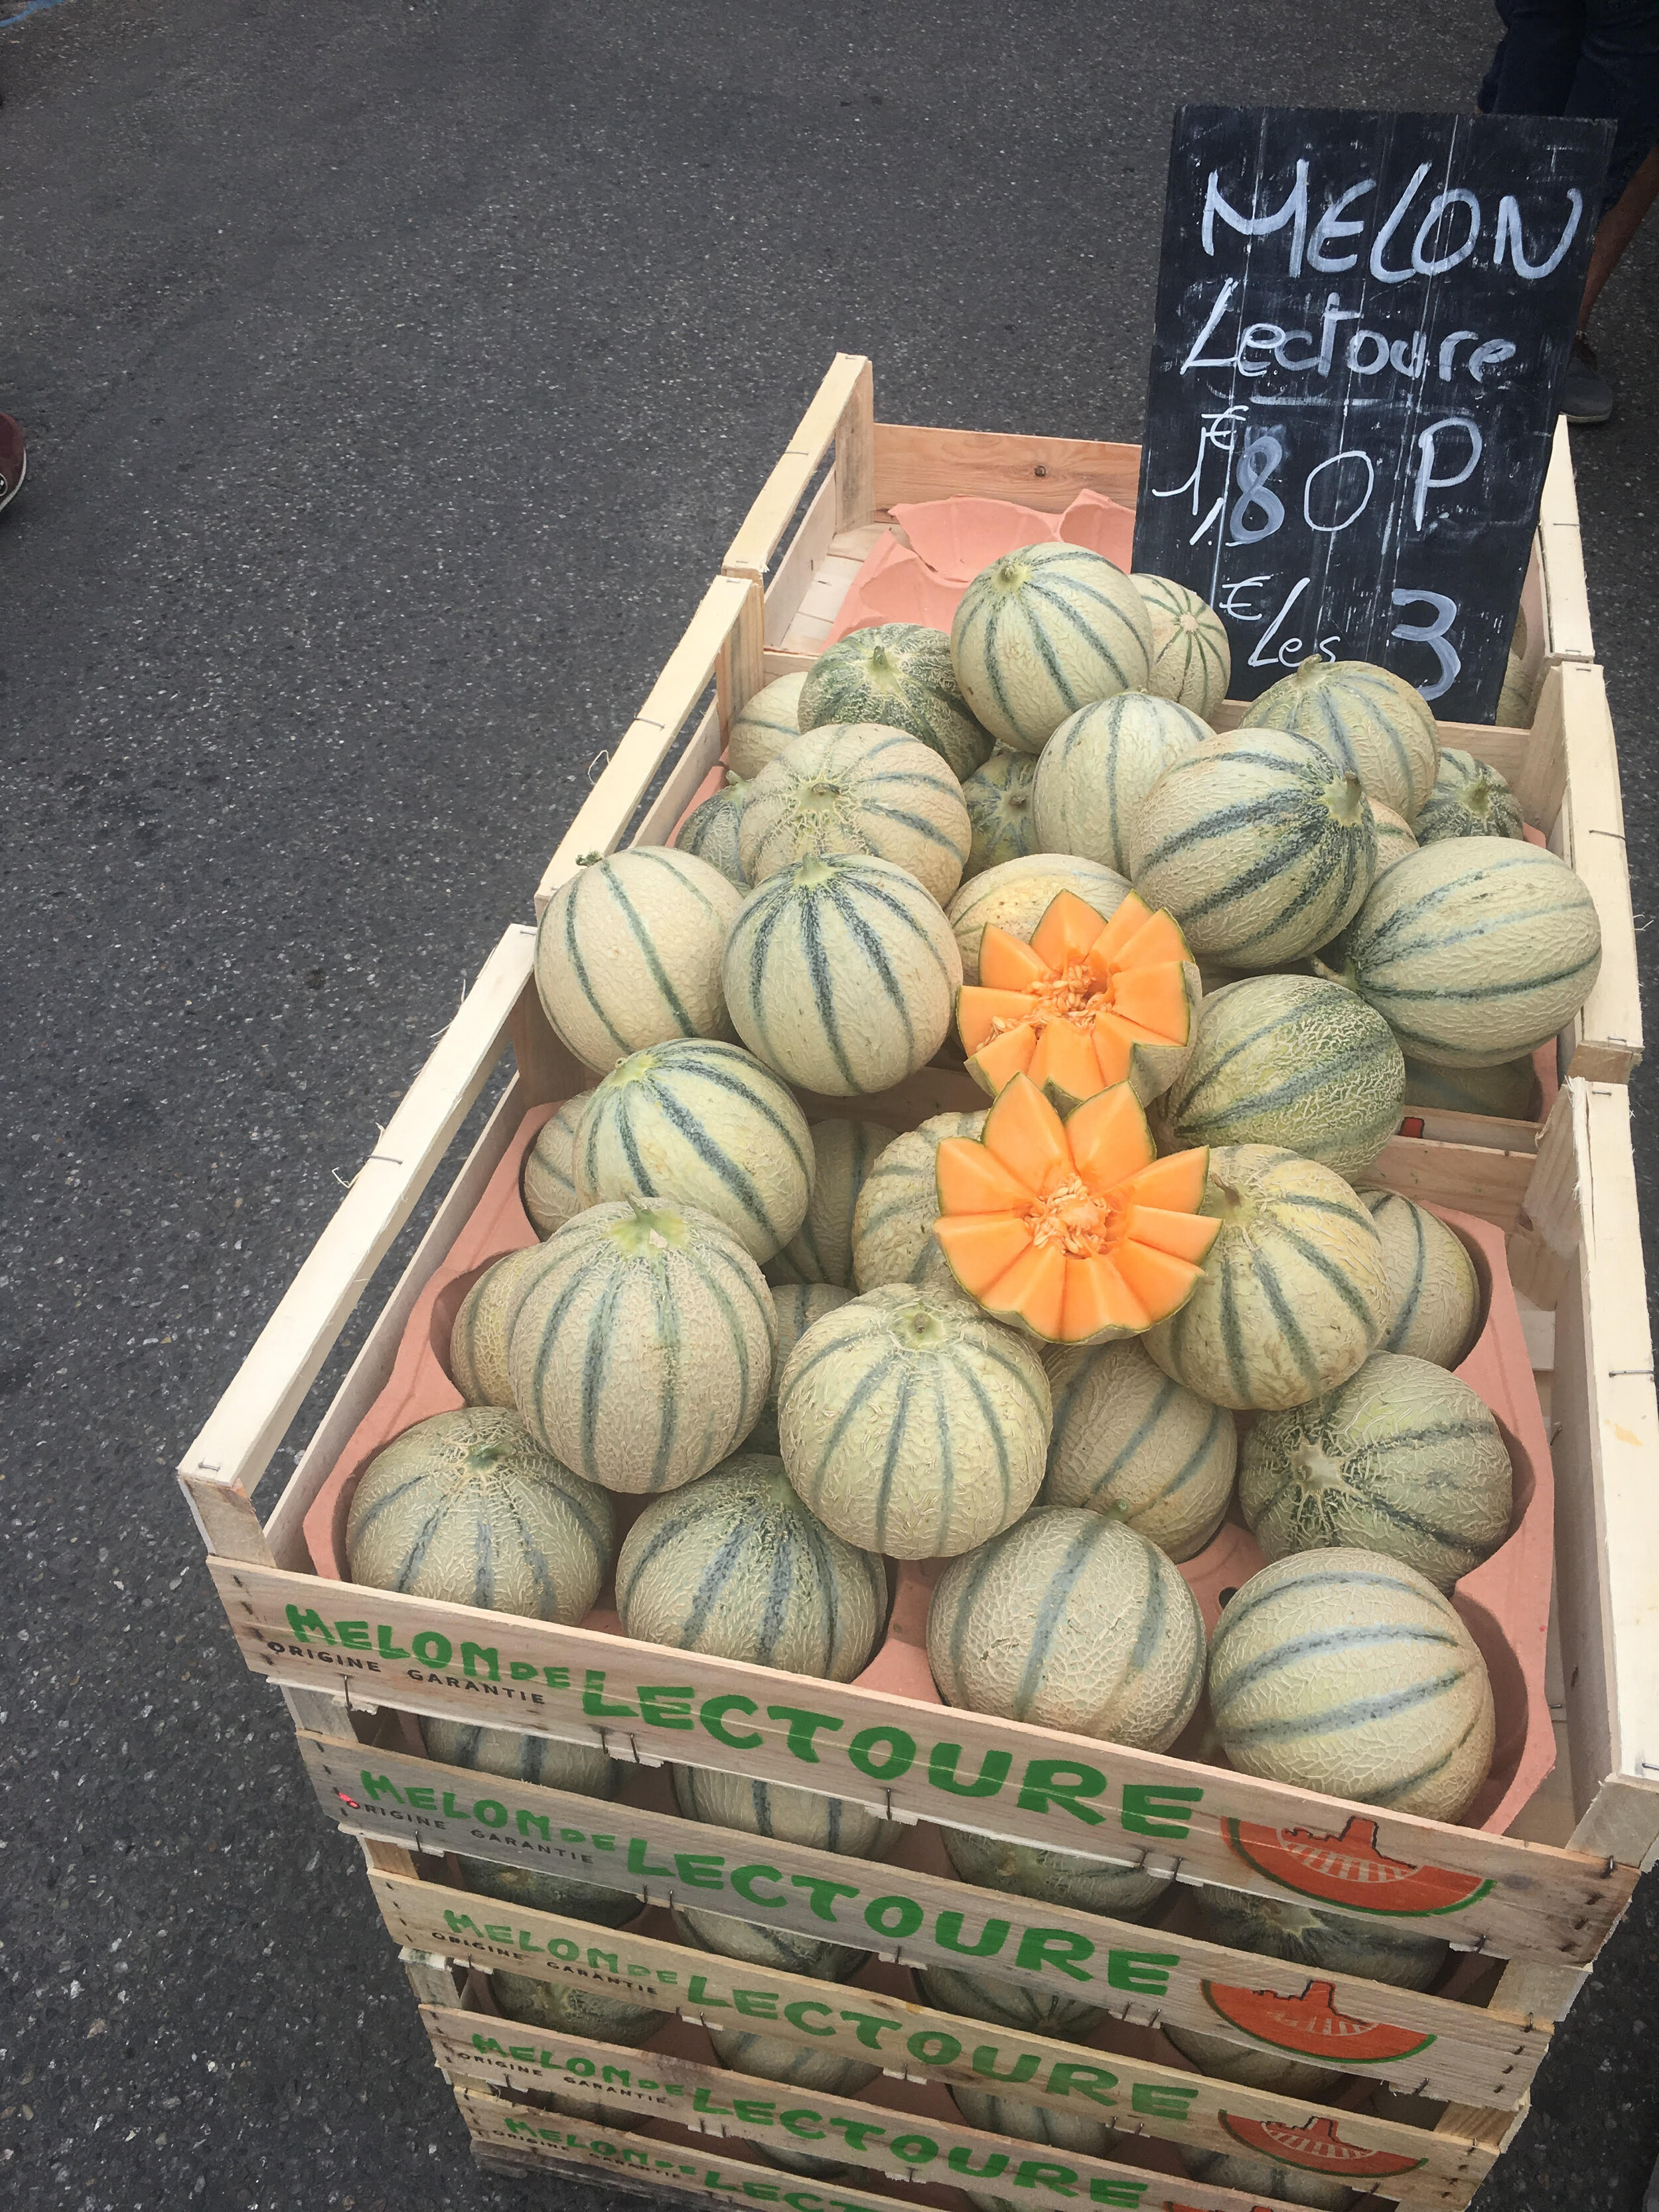 Melon Lectoure.jpg